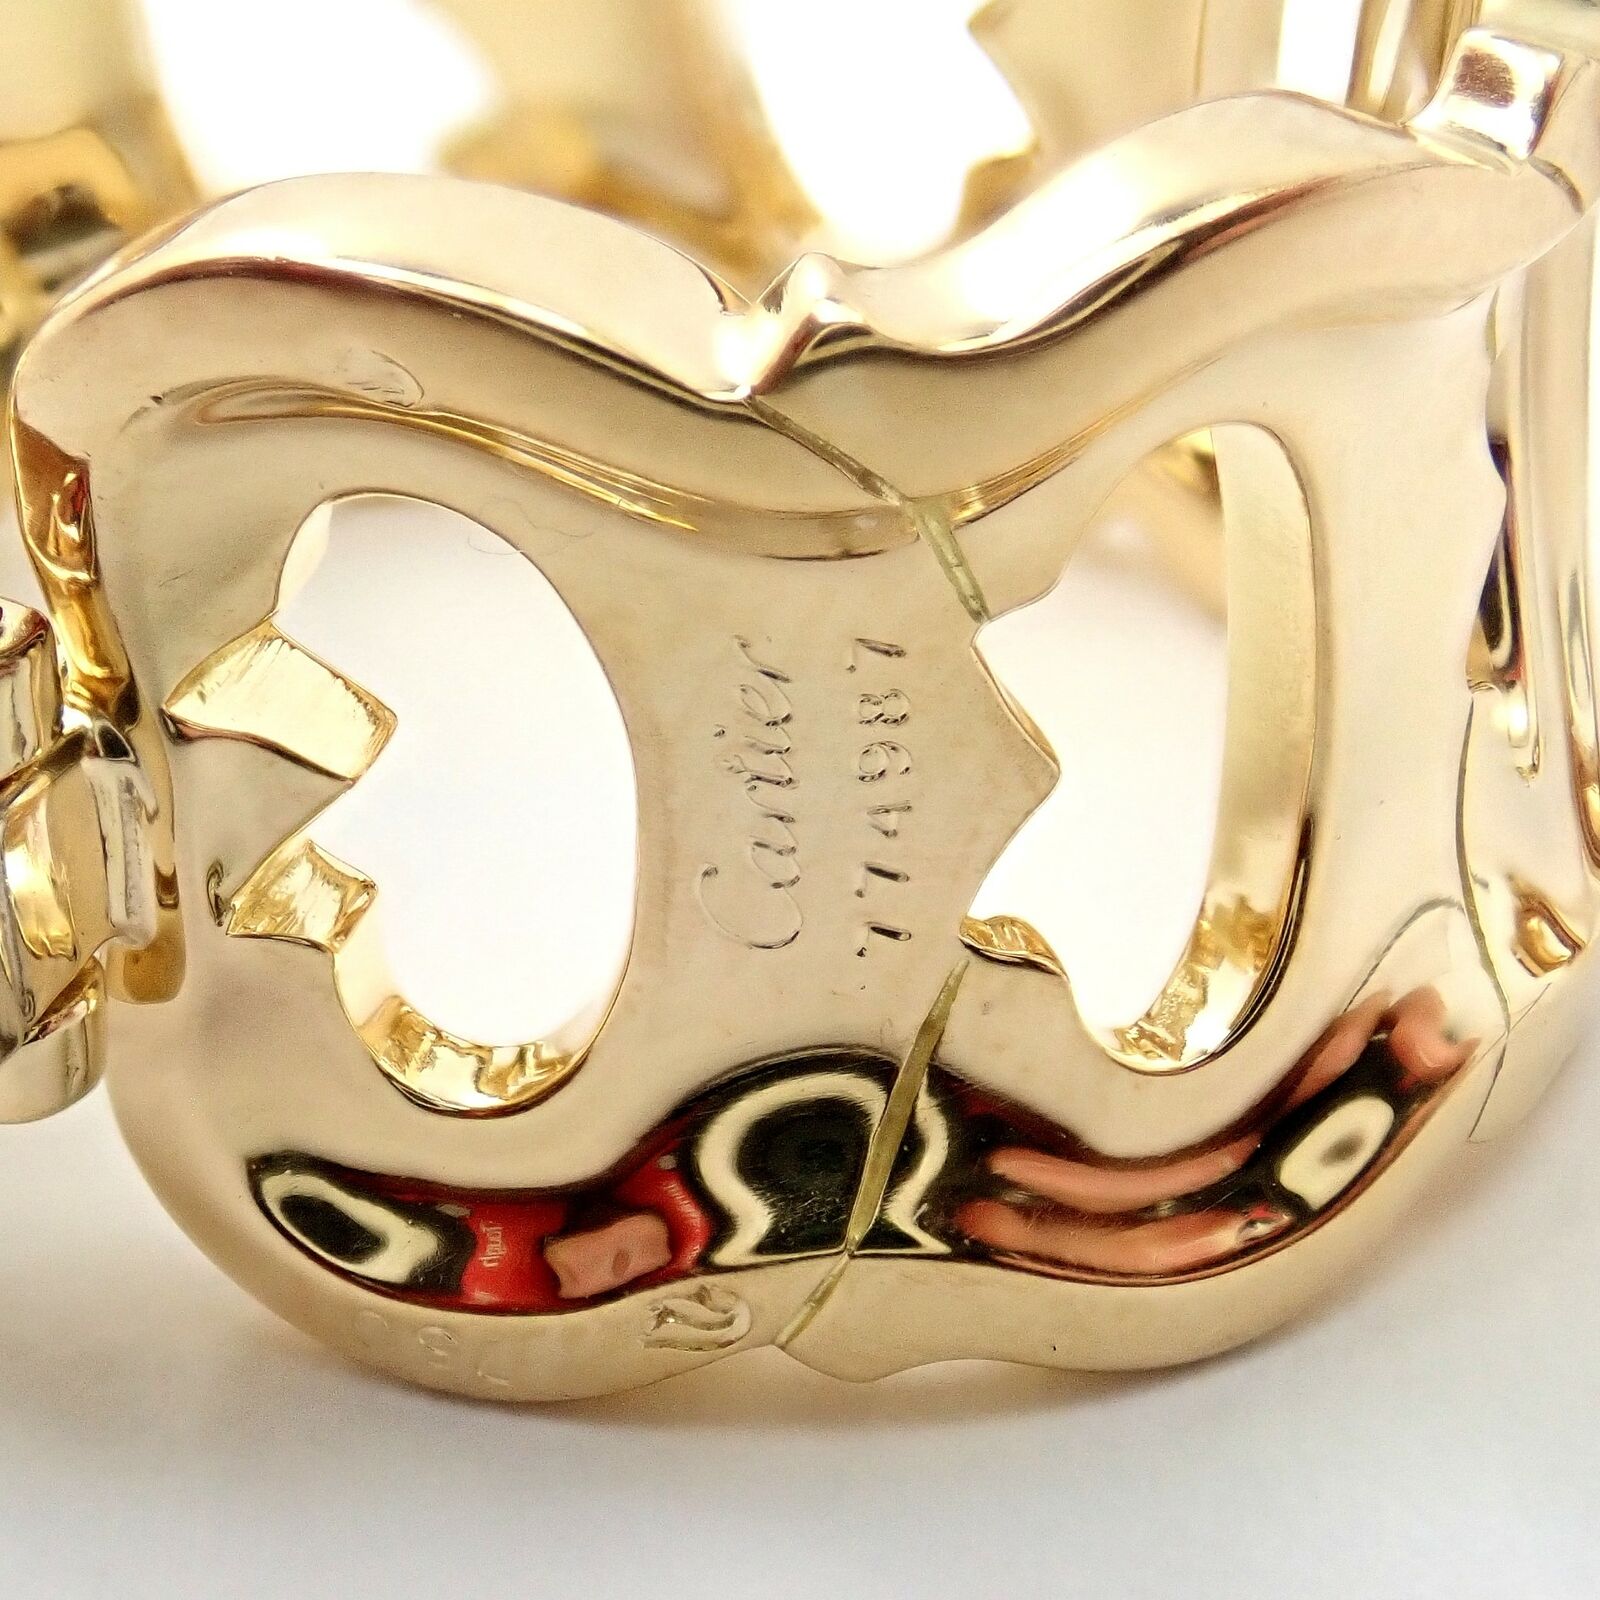 Cartier Jewelry & Watches:Fine Jewelry:Earrings Authentic! Cartier 18k Yellow Gold Signature C De Cartier Large Hoop Earrings